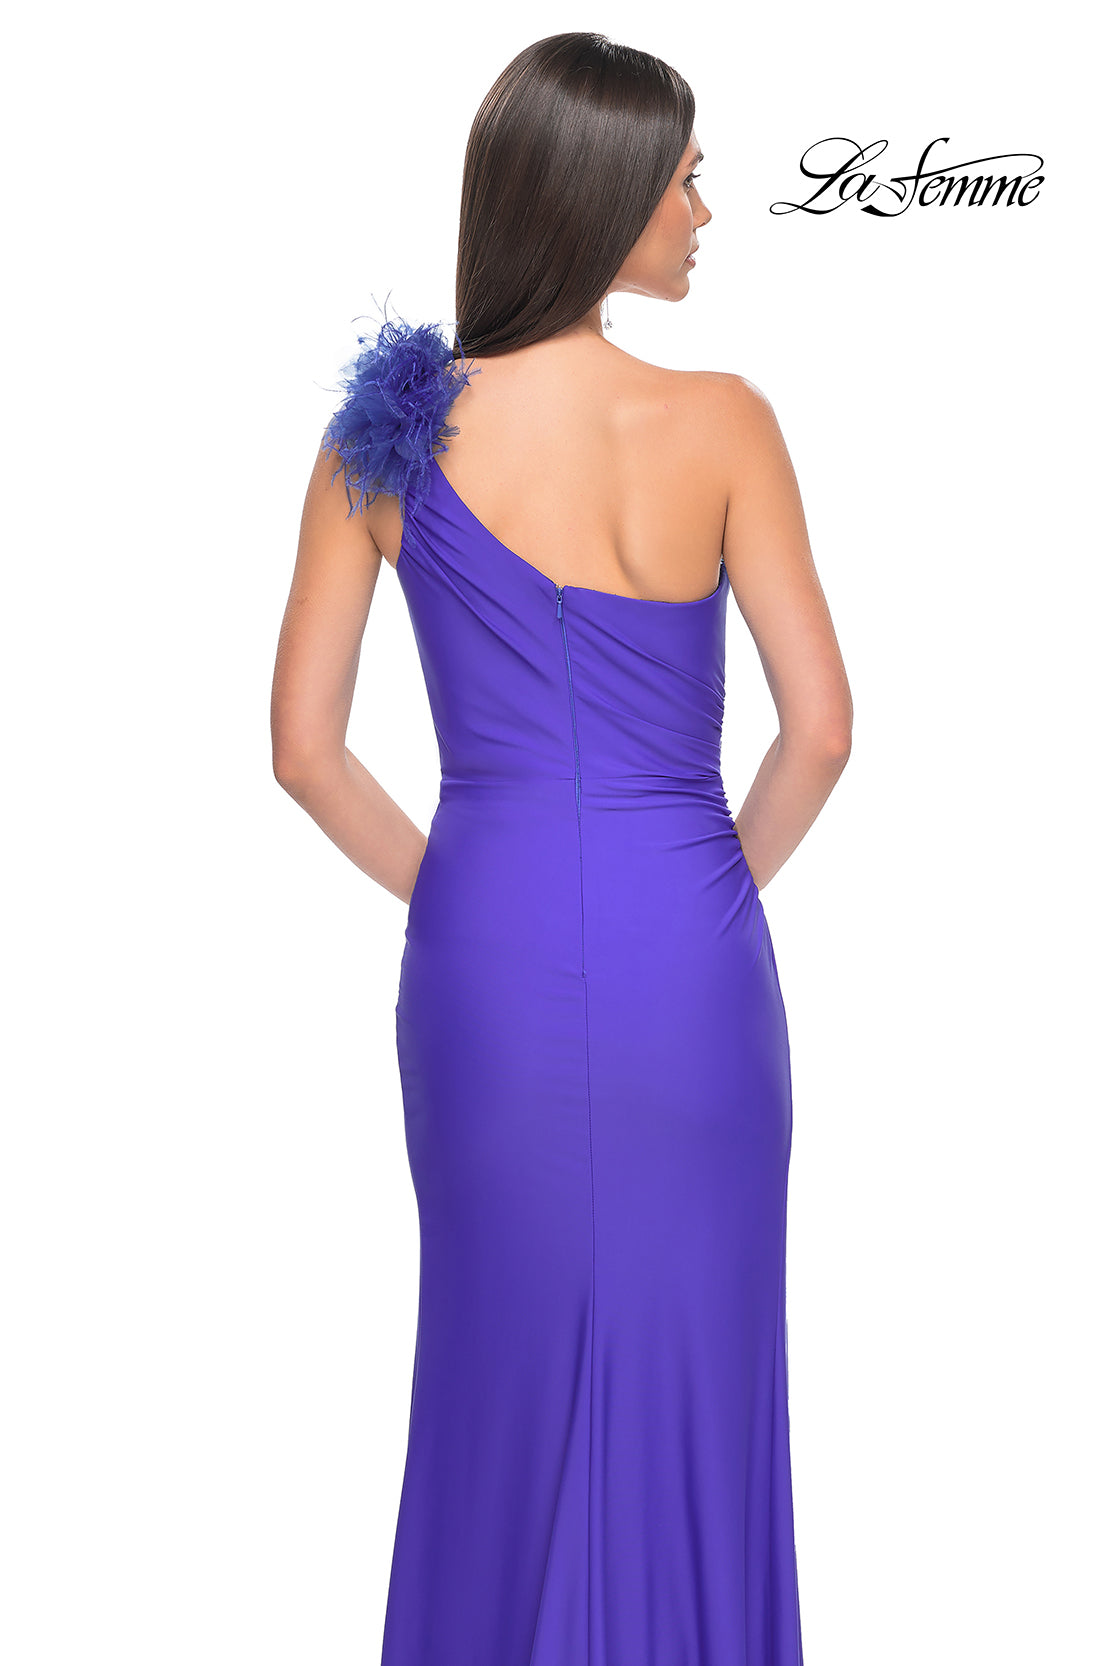 La-Femme-32076-One-Shoulder-Neckline-Zipper-Back-High-Slit-Jersey-Fitted-Royal-Blue-Evening-Dress-B-Chic-Fashions-Prom-Dress